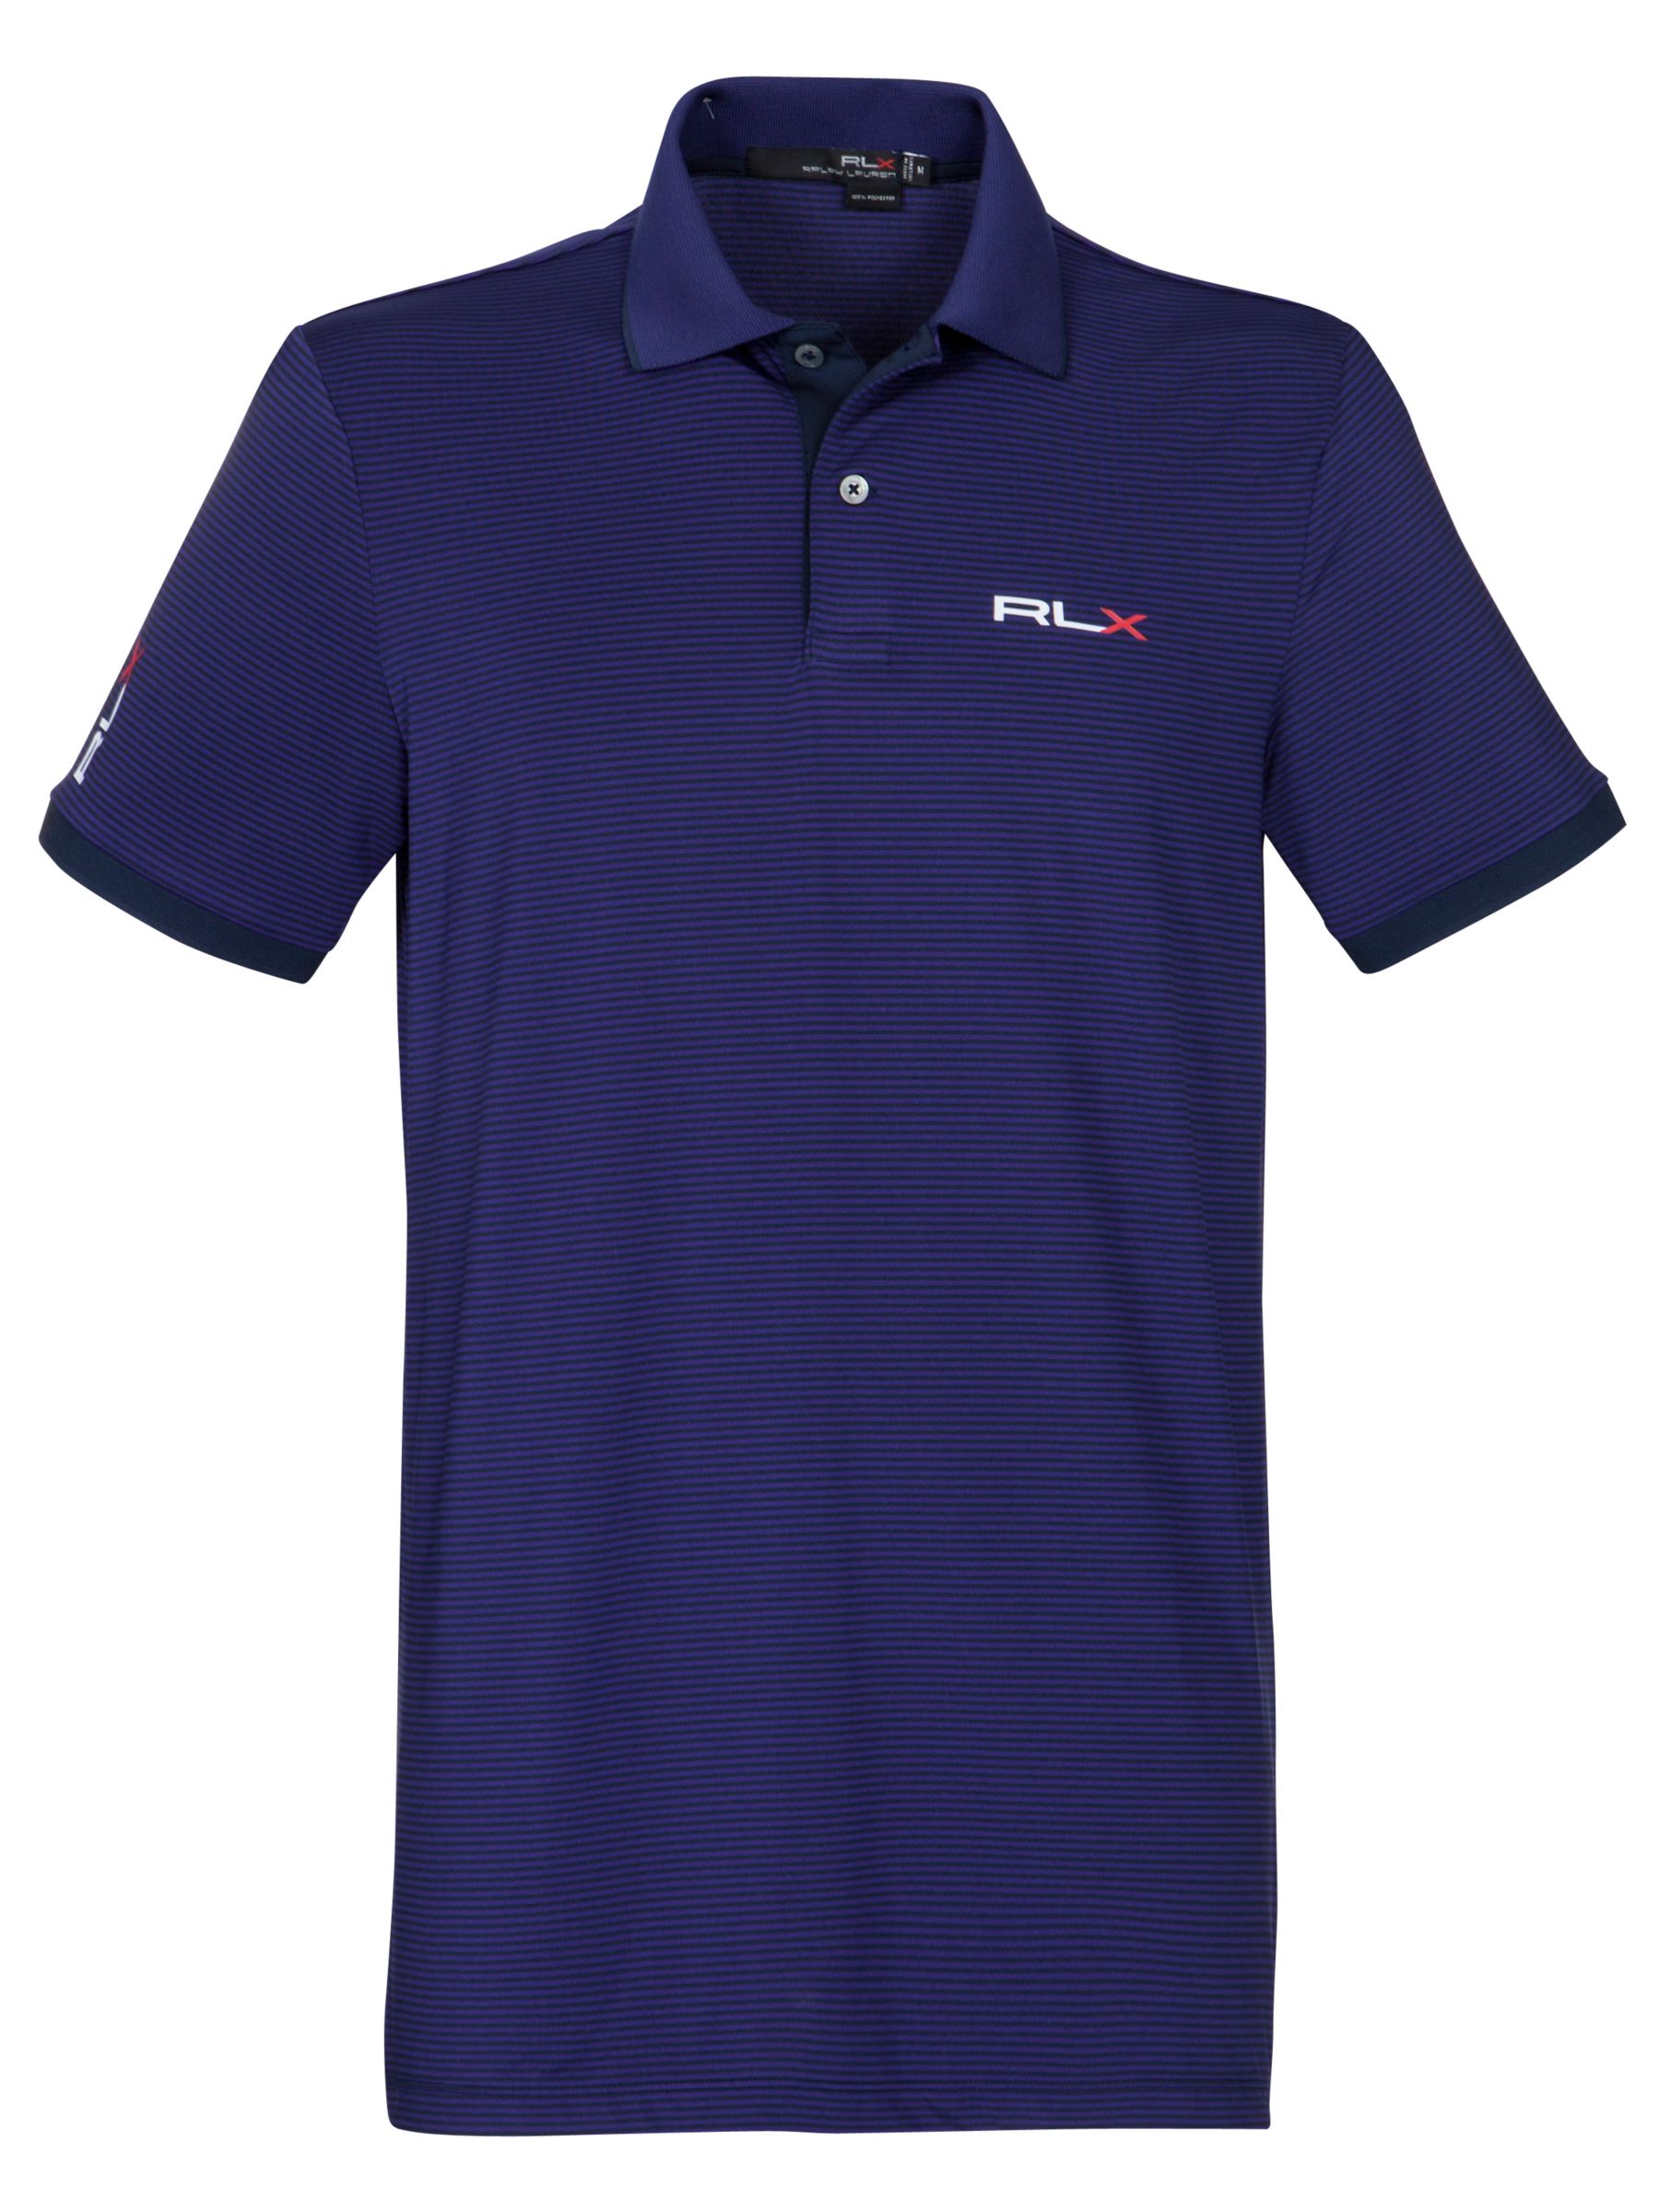 rlx golf shirts on sale